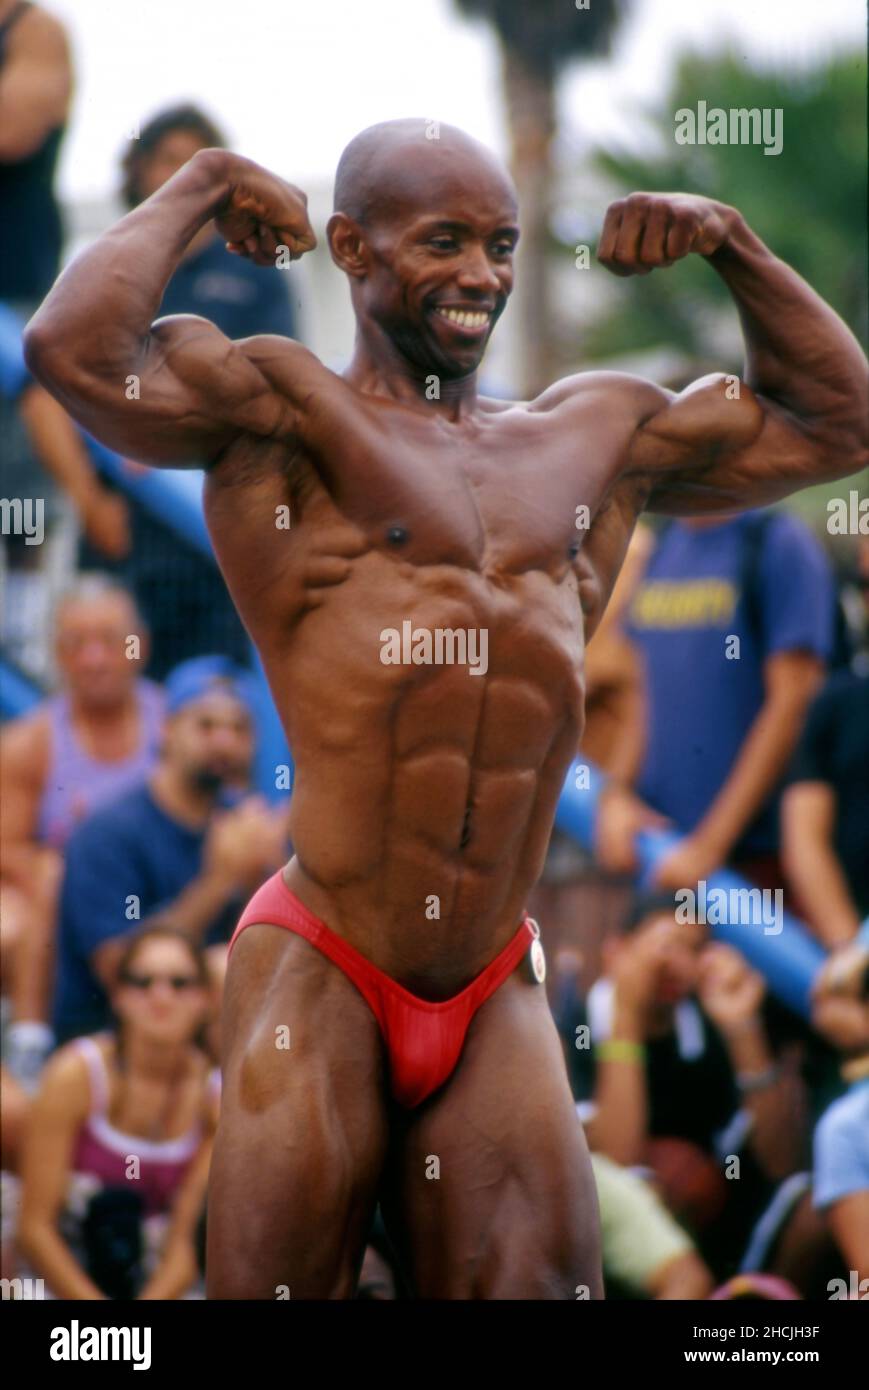 Bodybuilding competition Venice Beach, CA Stock Photo